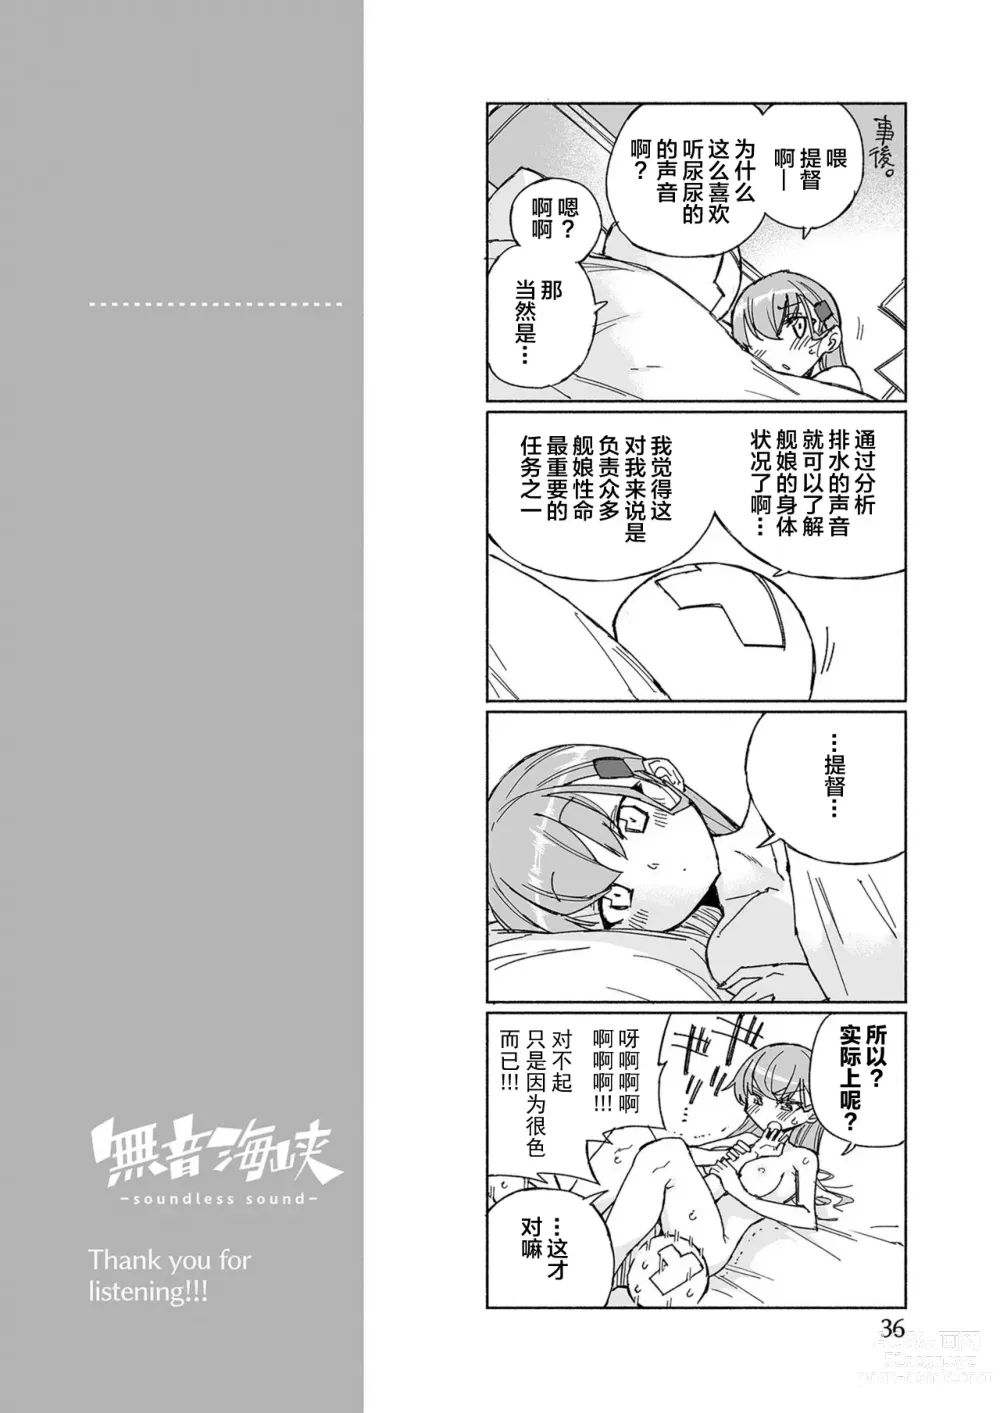 Page 42 of doujinshi Muon Kaikyou - soundless sound -